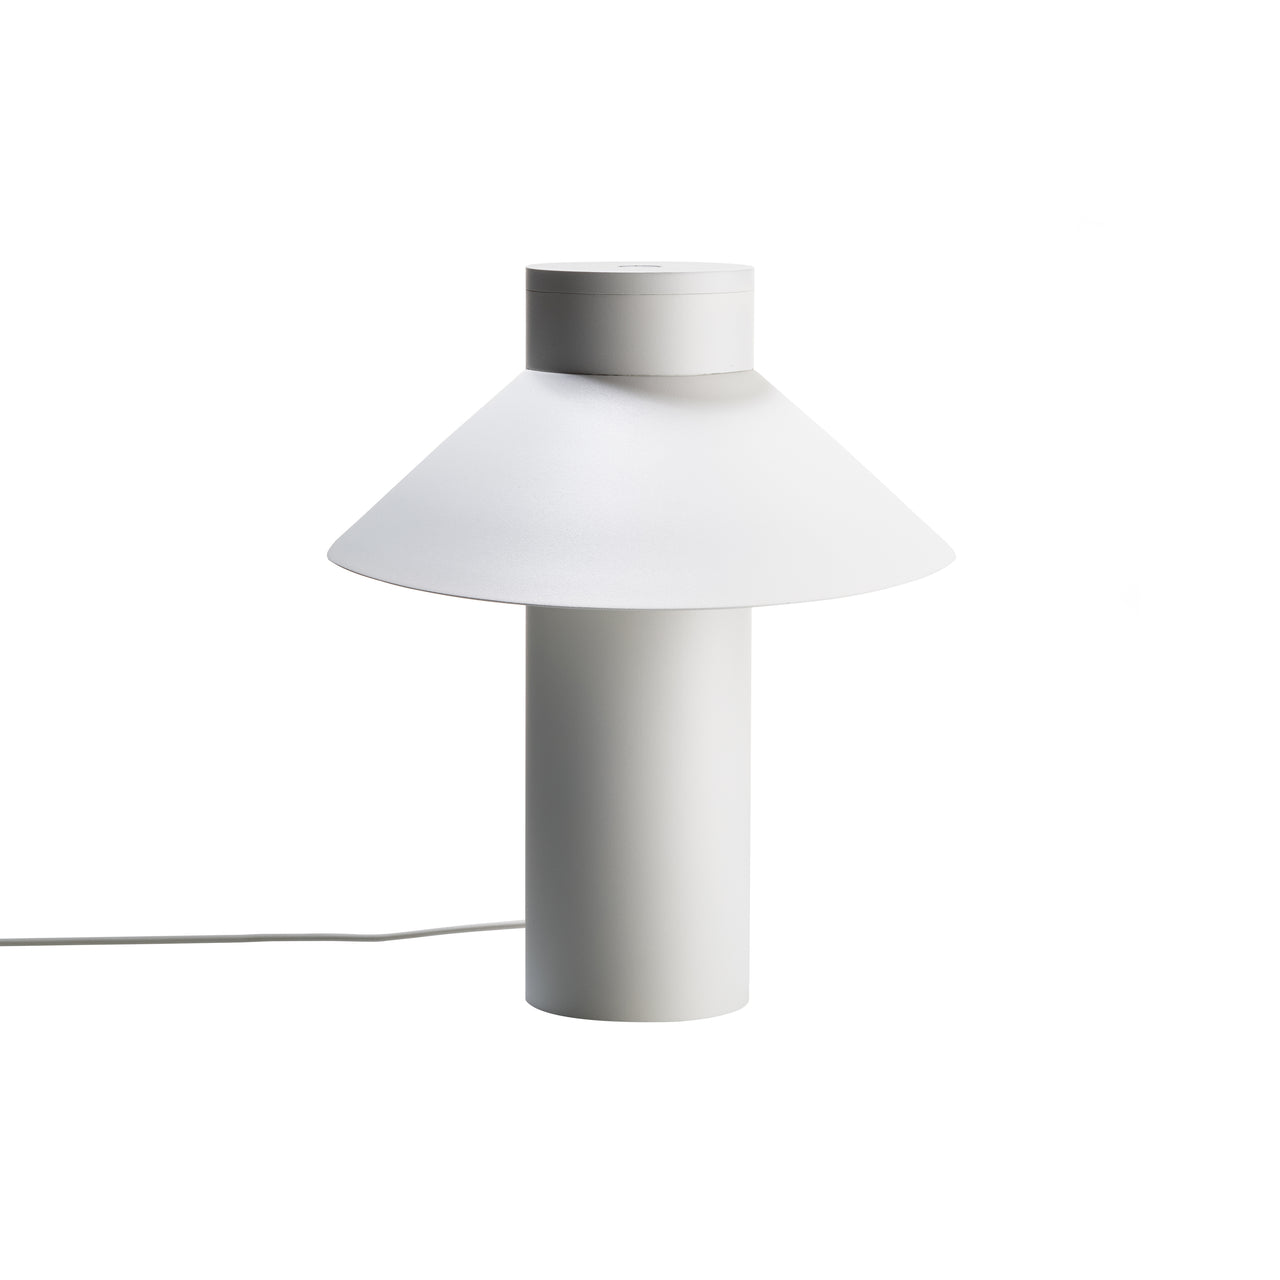 Riscio Table Lamp: White